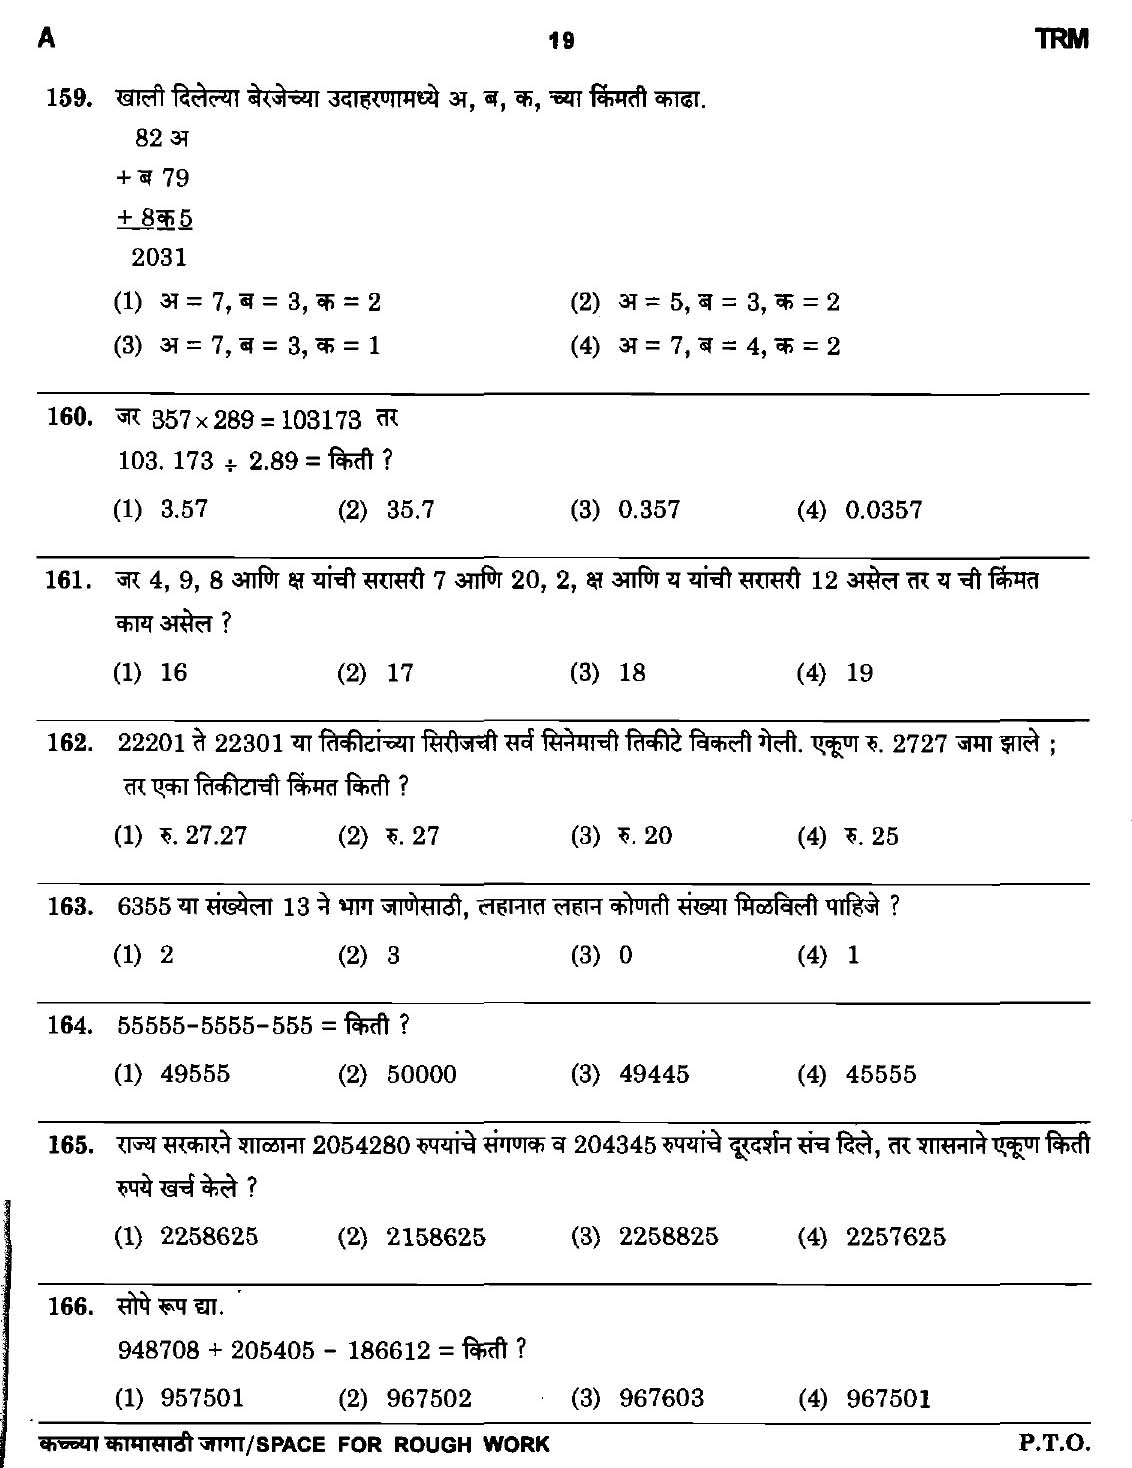 Maharashtra PSC Clerk Typist Exam Question Paper 2011 18